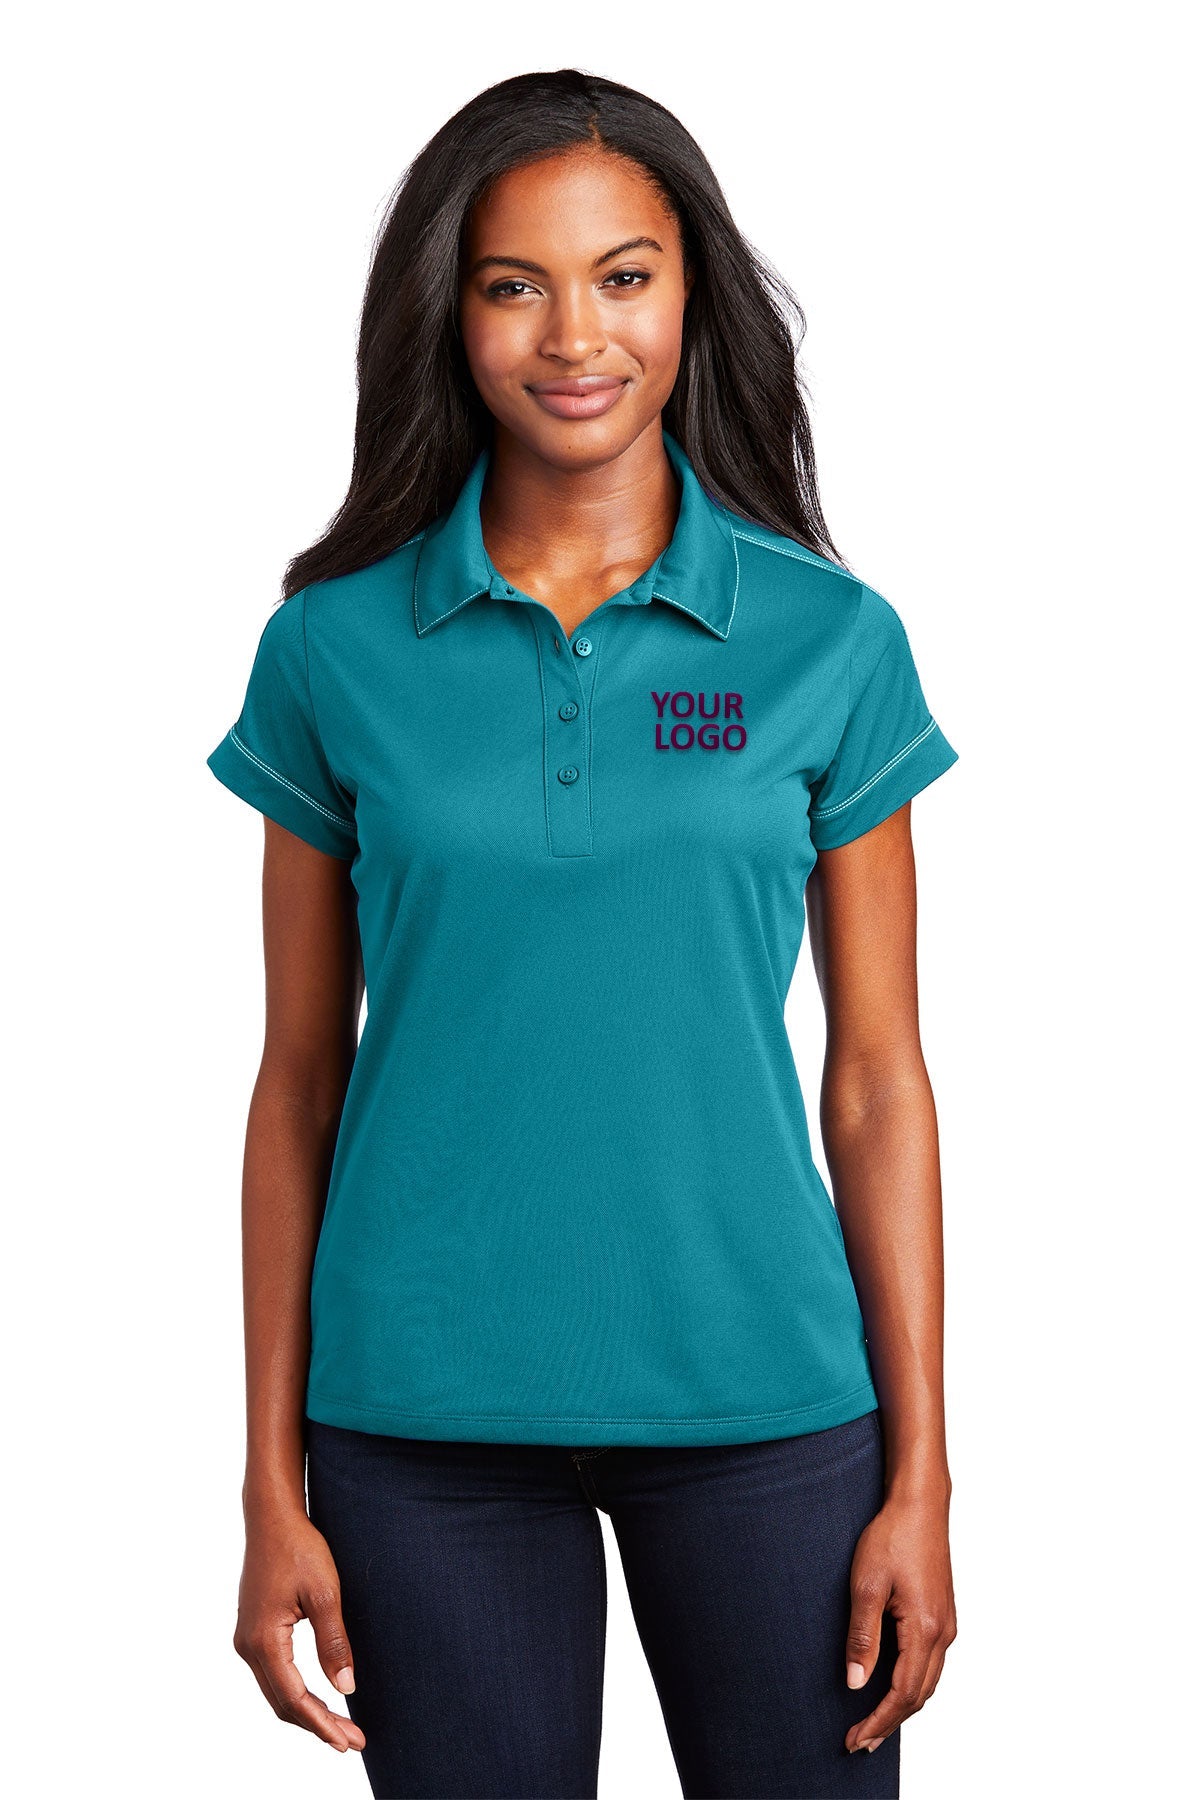 Sport-Tek Tropic Blue LST659 custom women's polo shirts